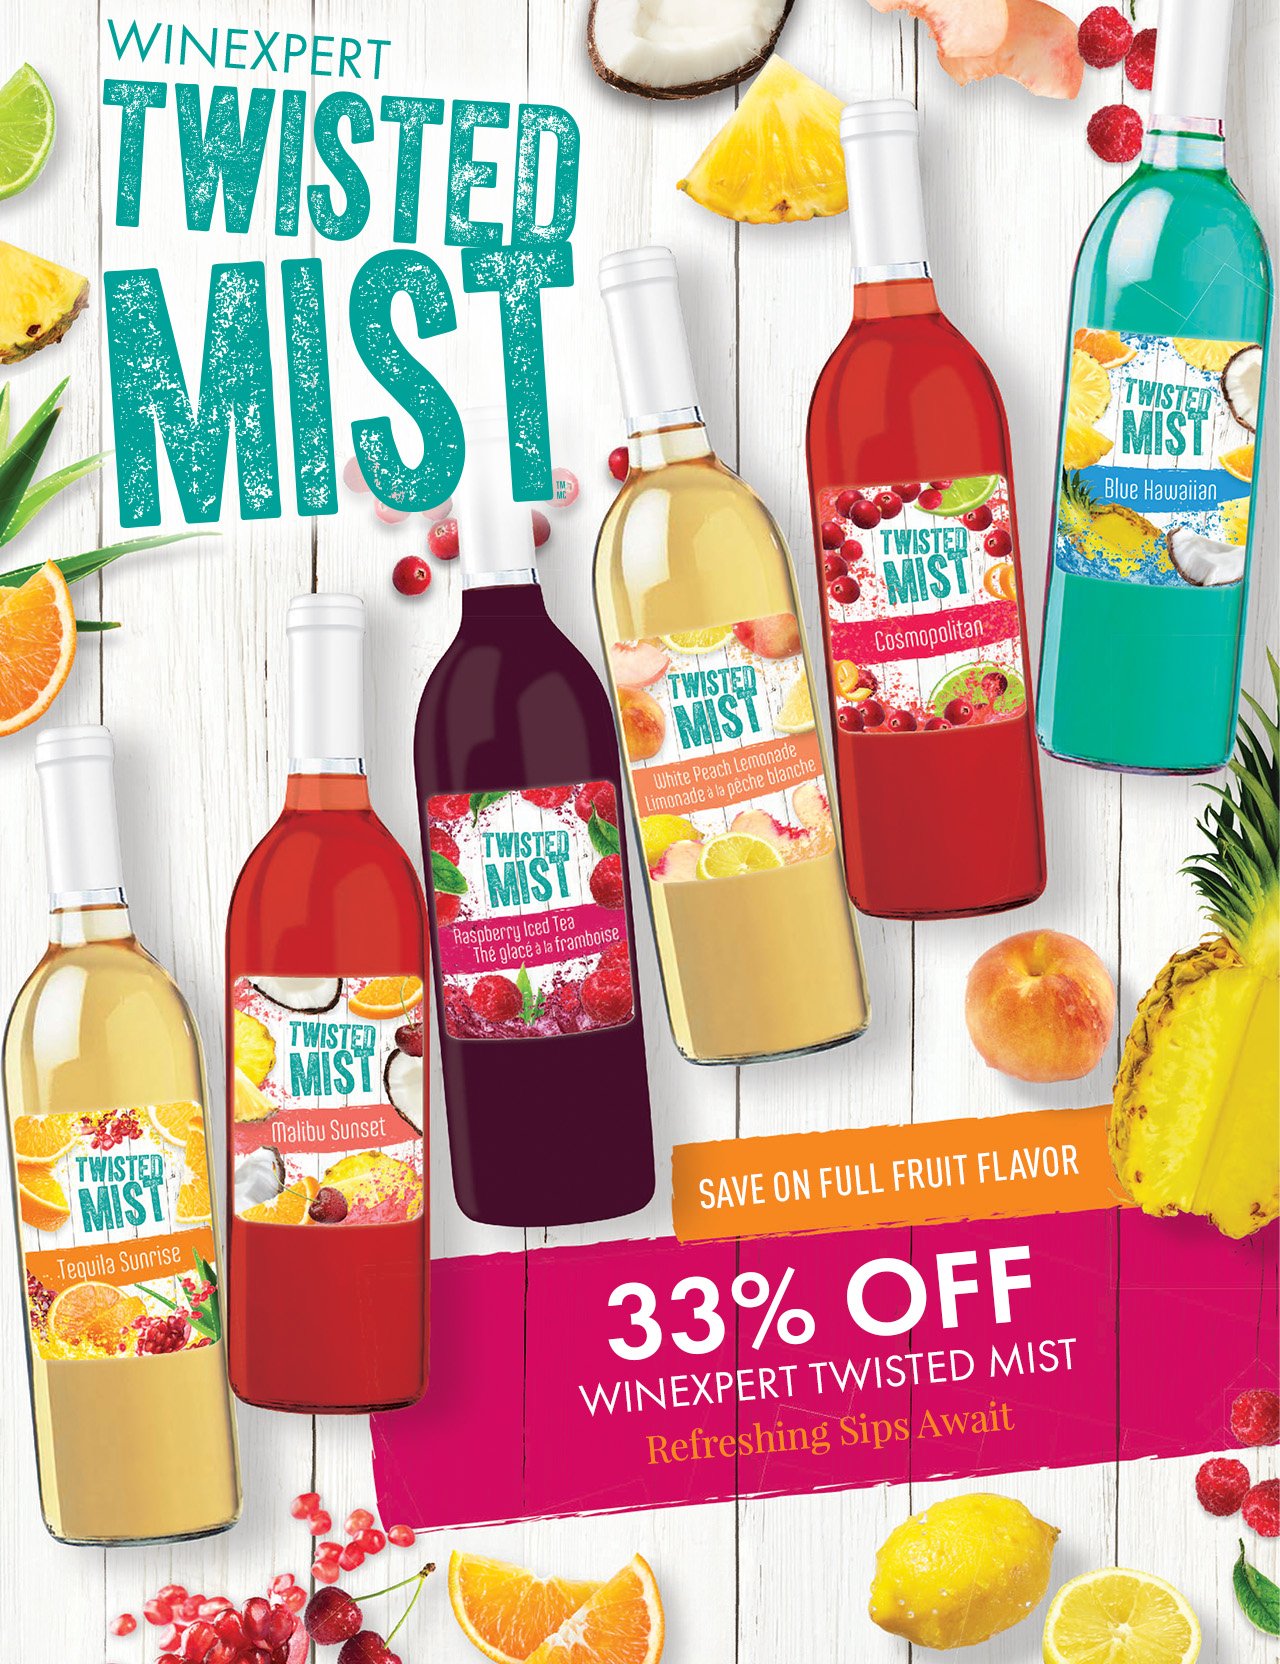 Winexpert Twisted Mist 33% Off